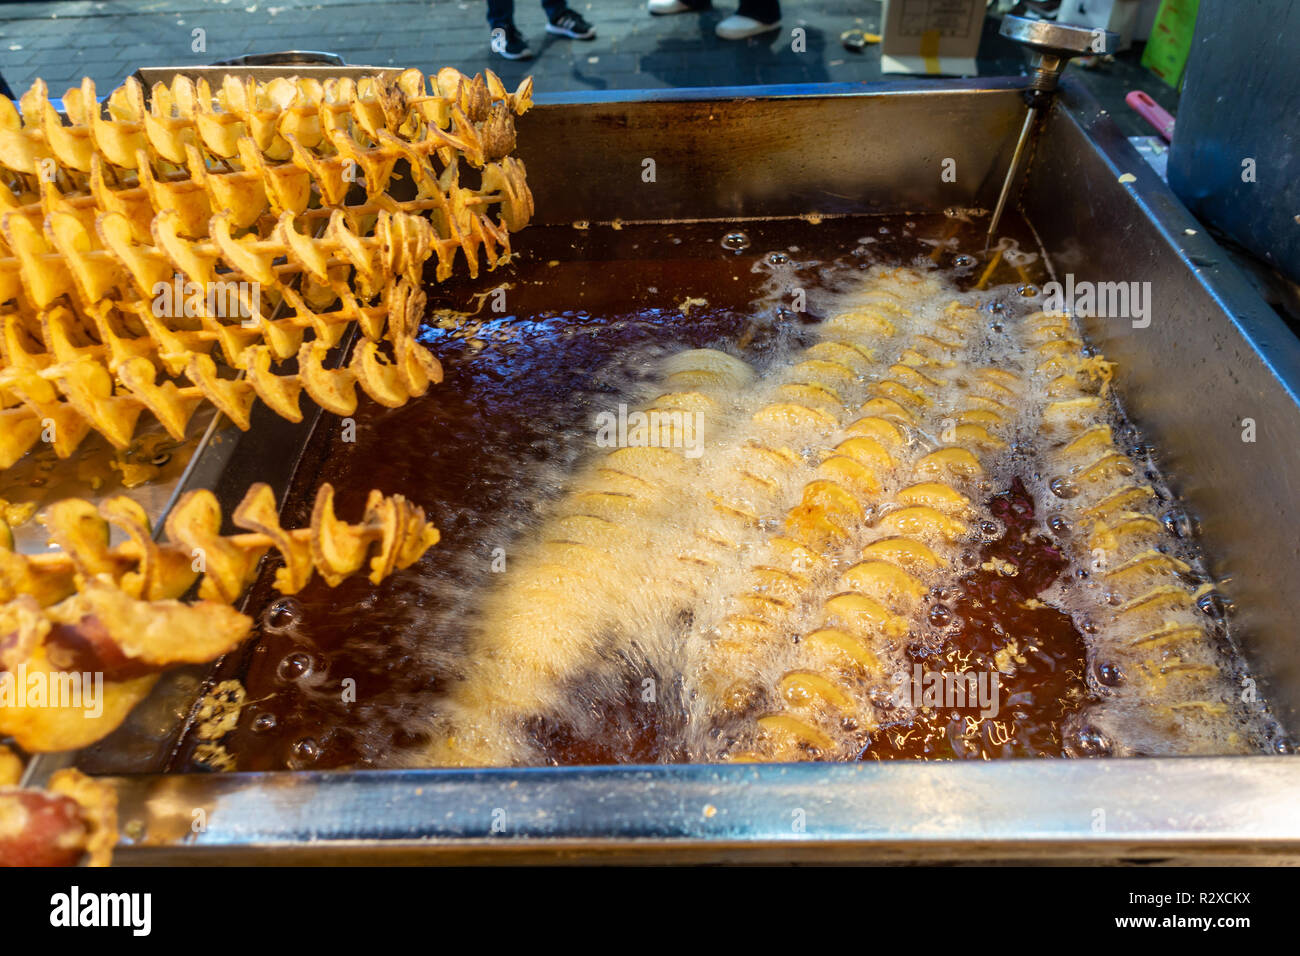 https://c8.alamy.com/comp/R2XCKX/potato-spirals-on-wooden-skewers-deep-frying-in-hot-oil-on-a-street-food-stall-in-myeongdong-in-seoul-south-korea-R2XCKX.jpg